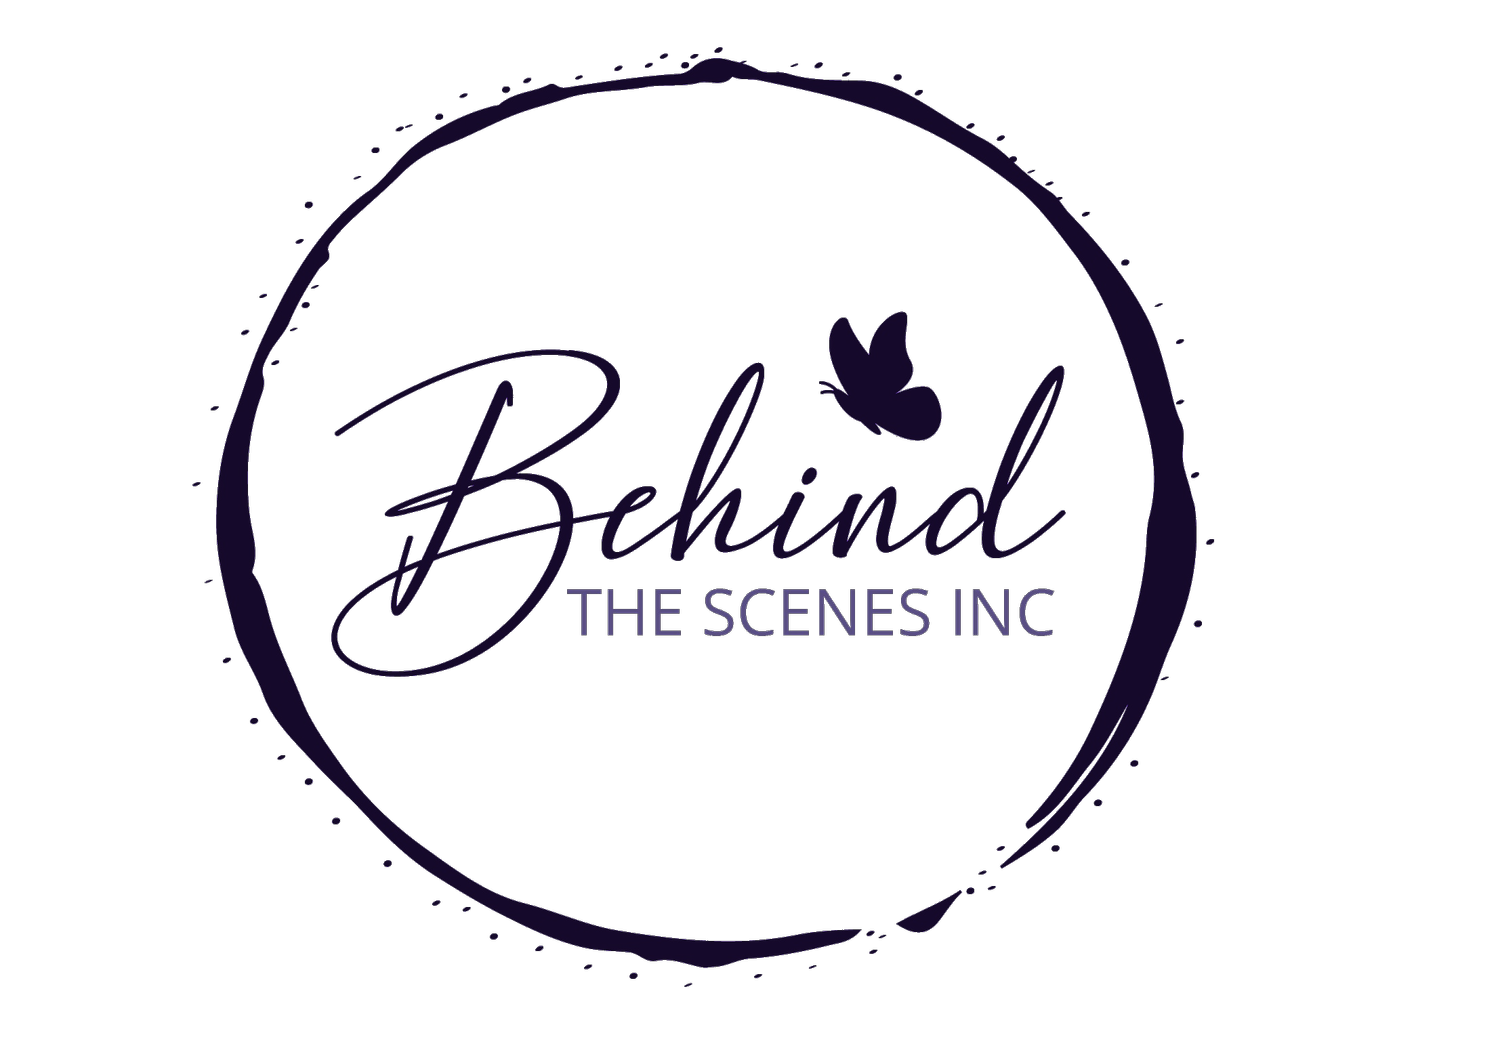 Behind The Scenes Inc